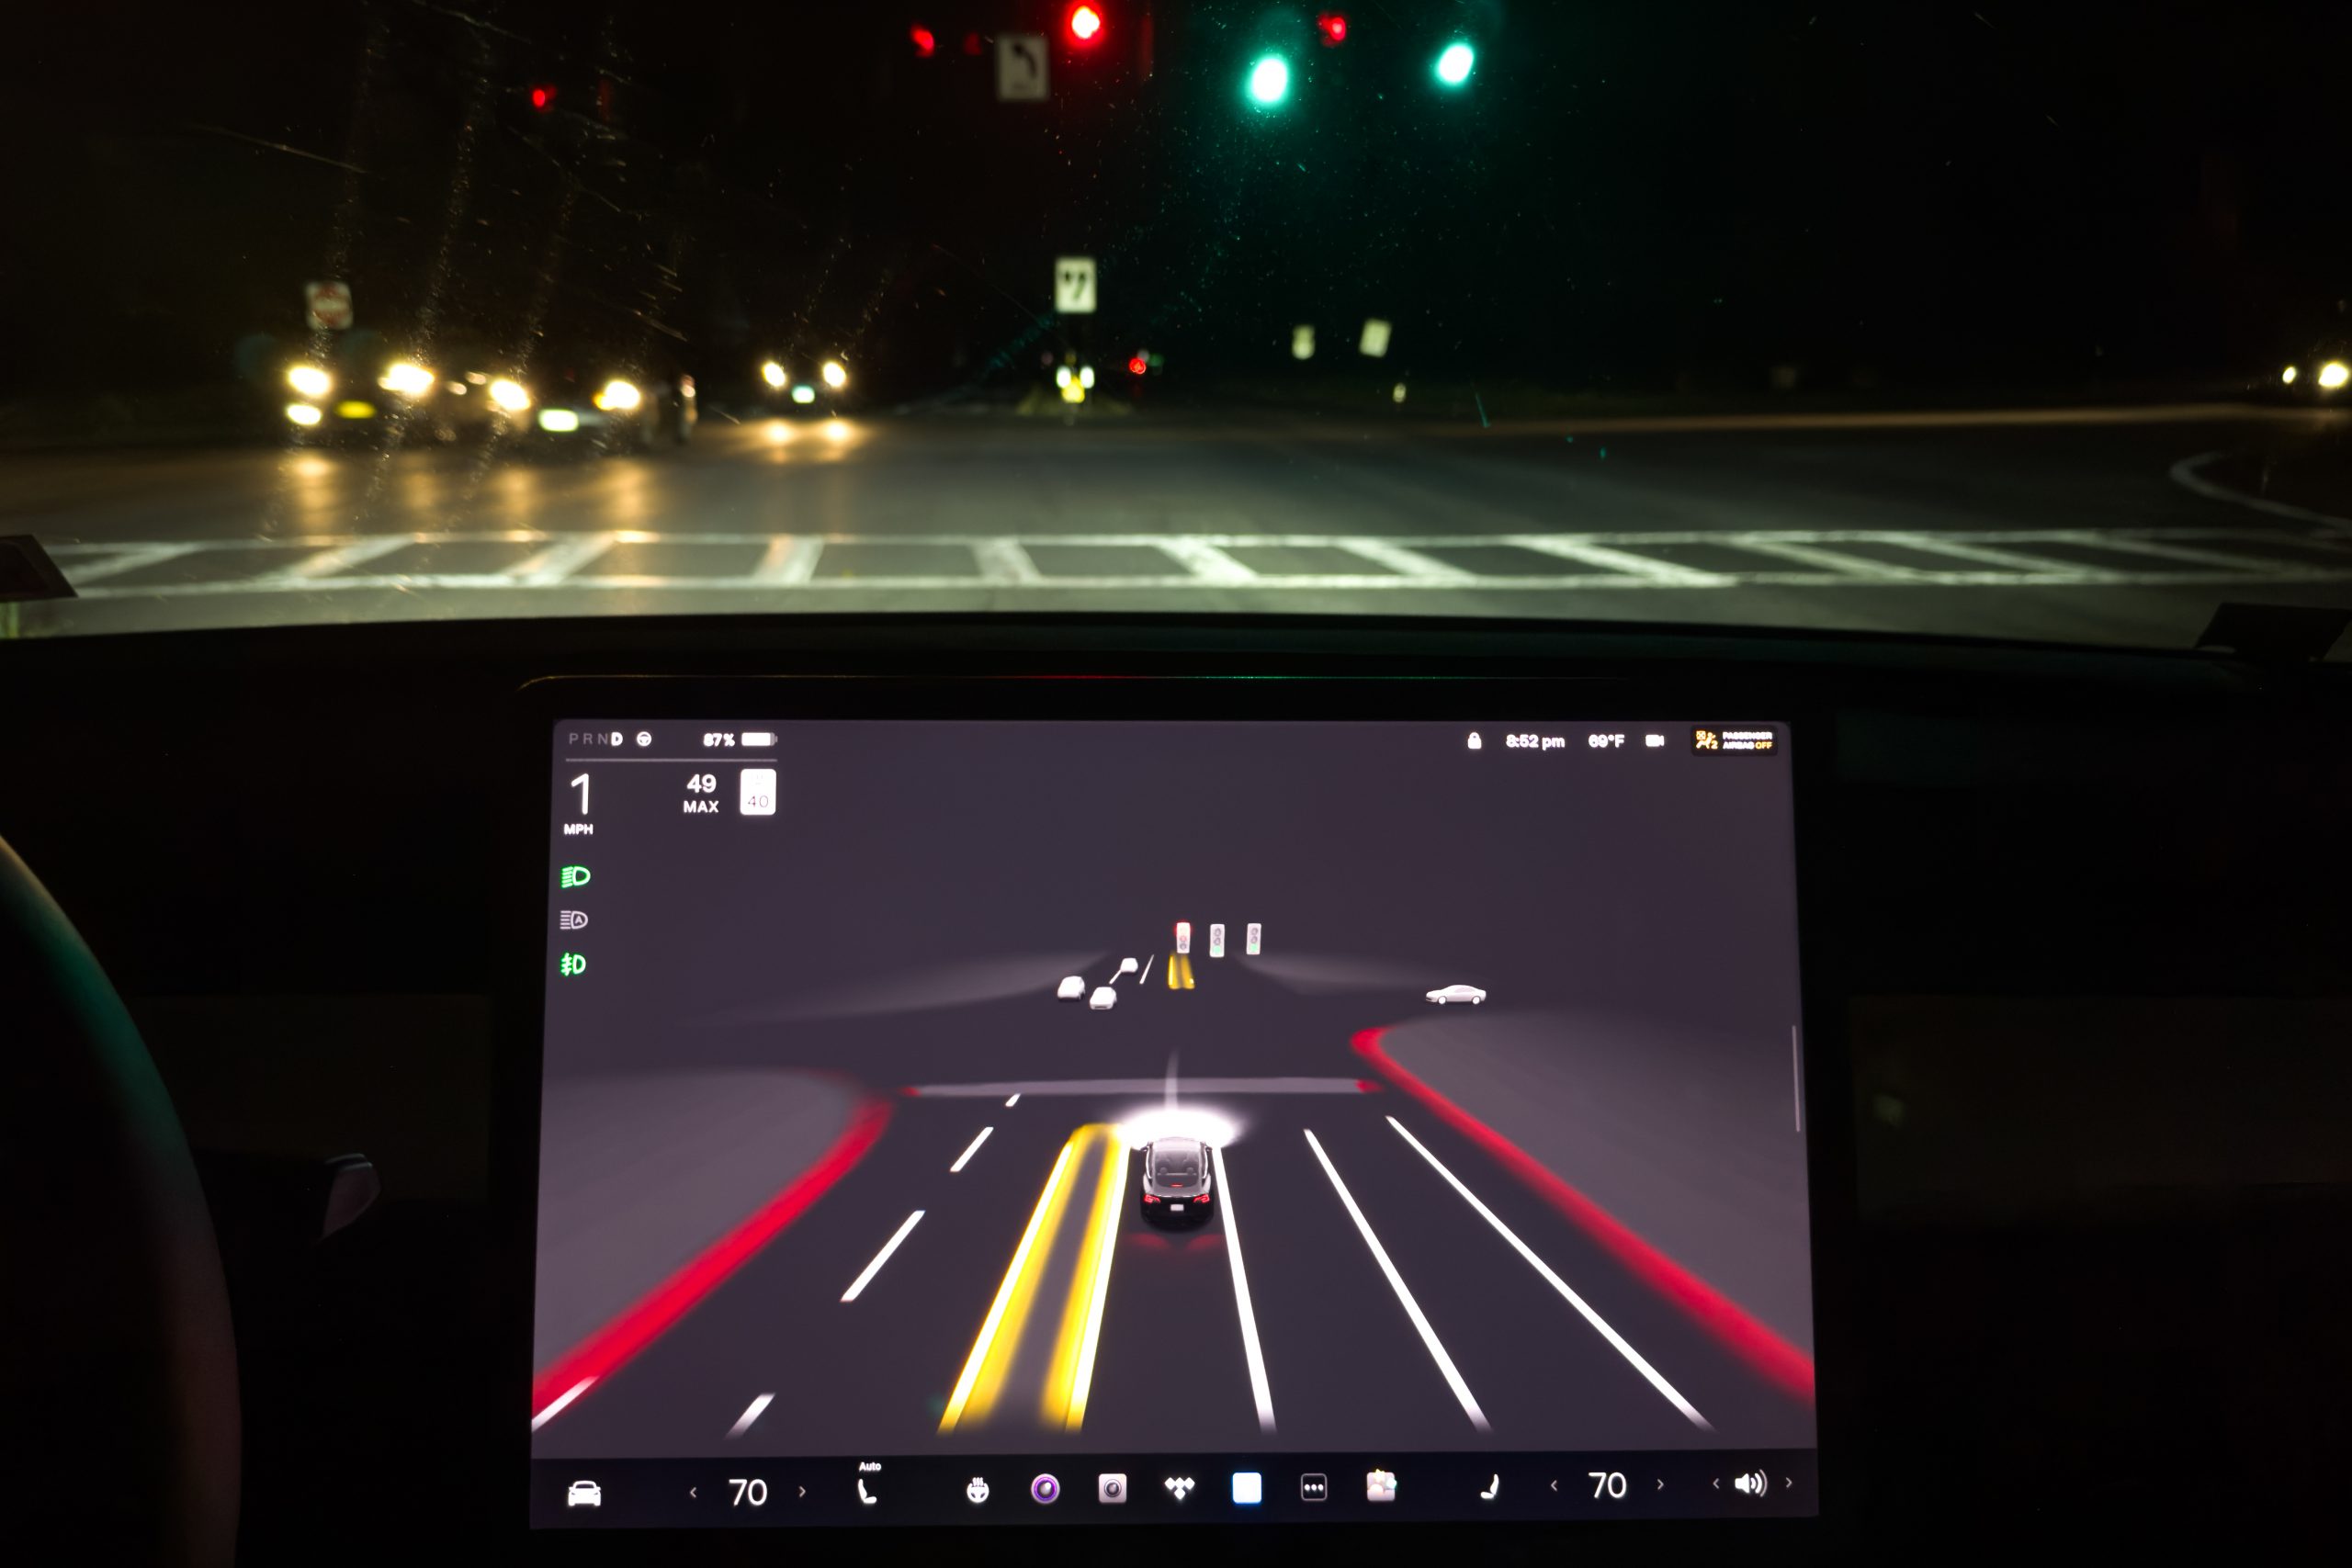 Tesla Model 3 display screen